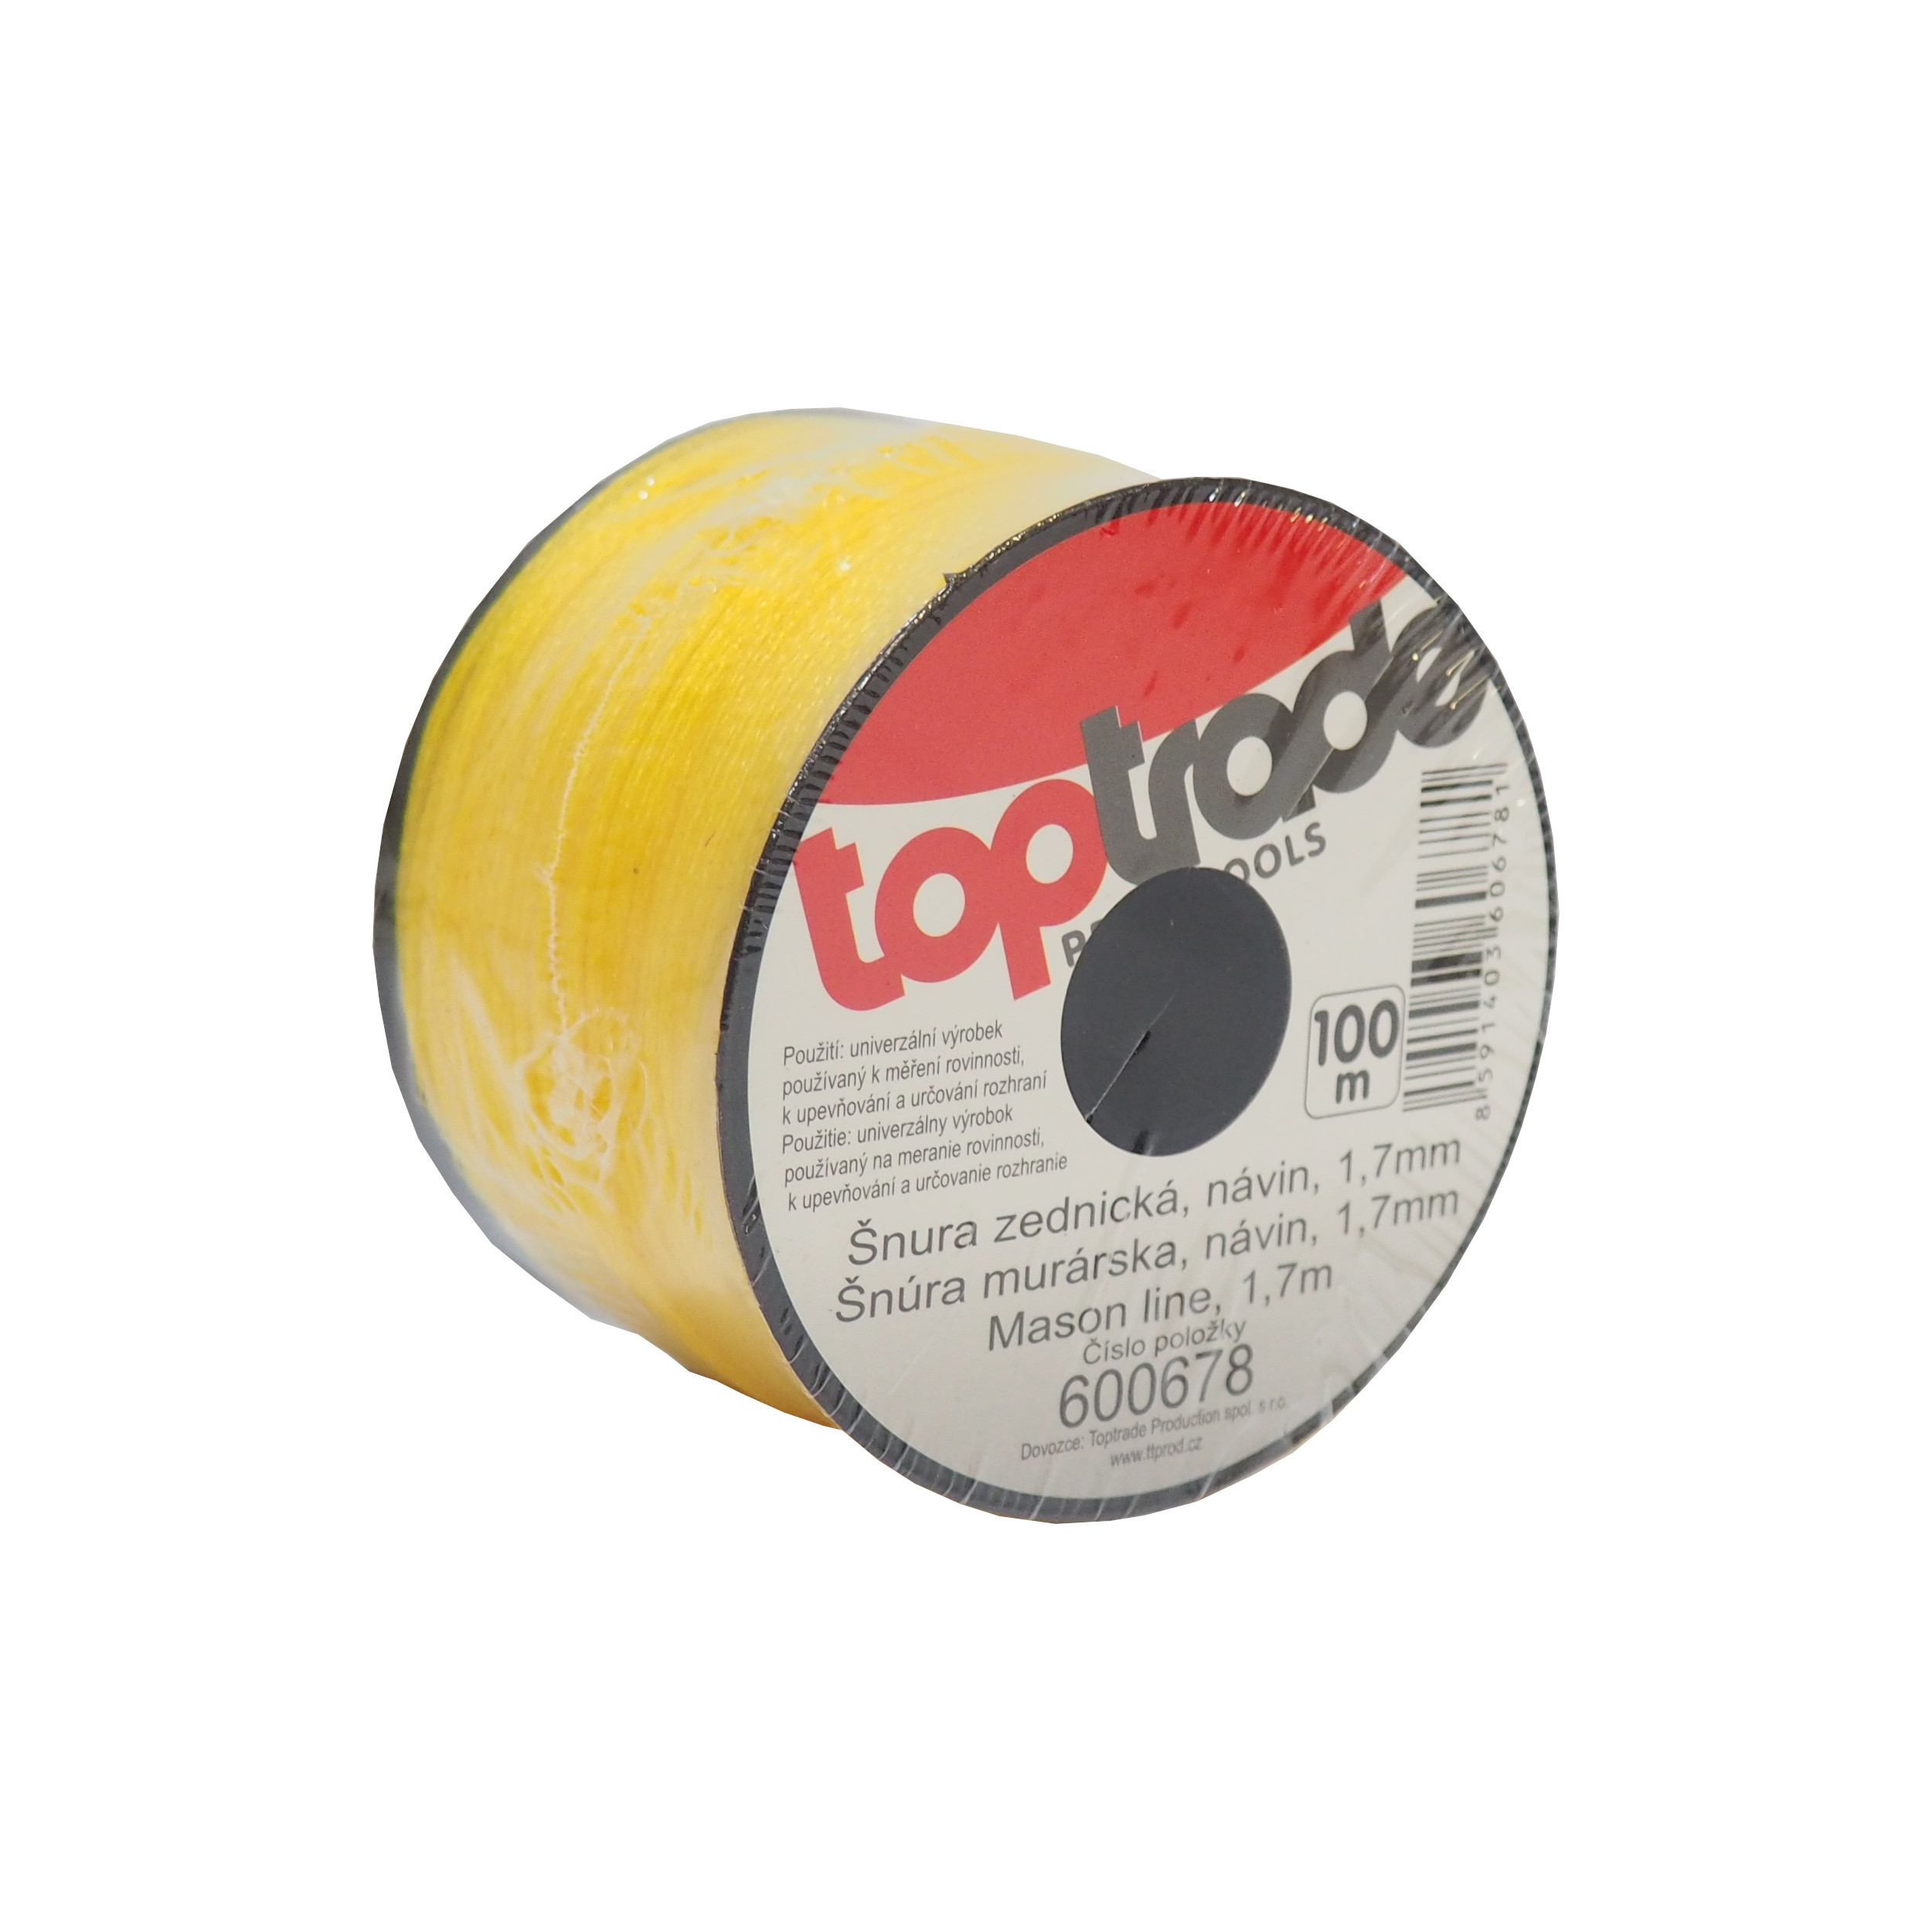 TOPTRADE šňůra zednická PE, O 1,7 mm / 100 m, žlutá 0.12 Kg TOP Sklad4 600678 324